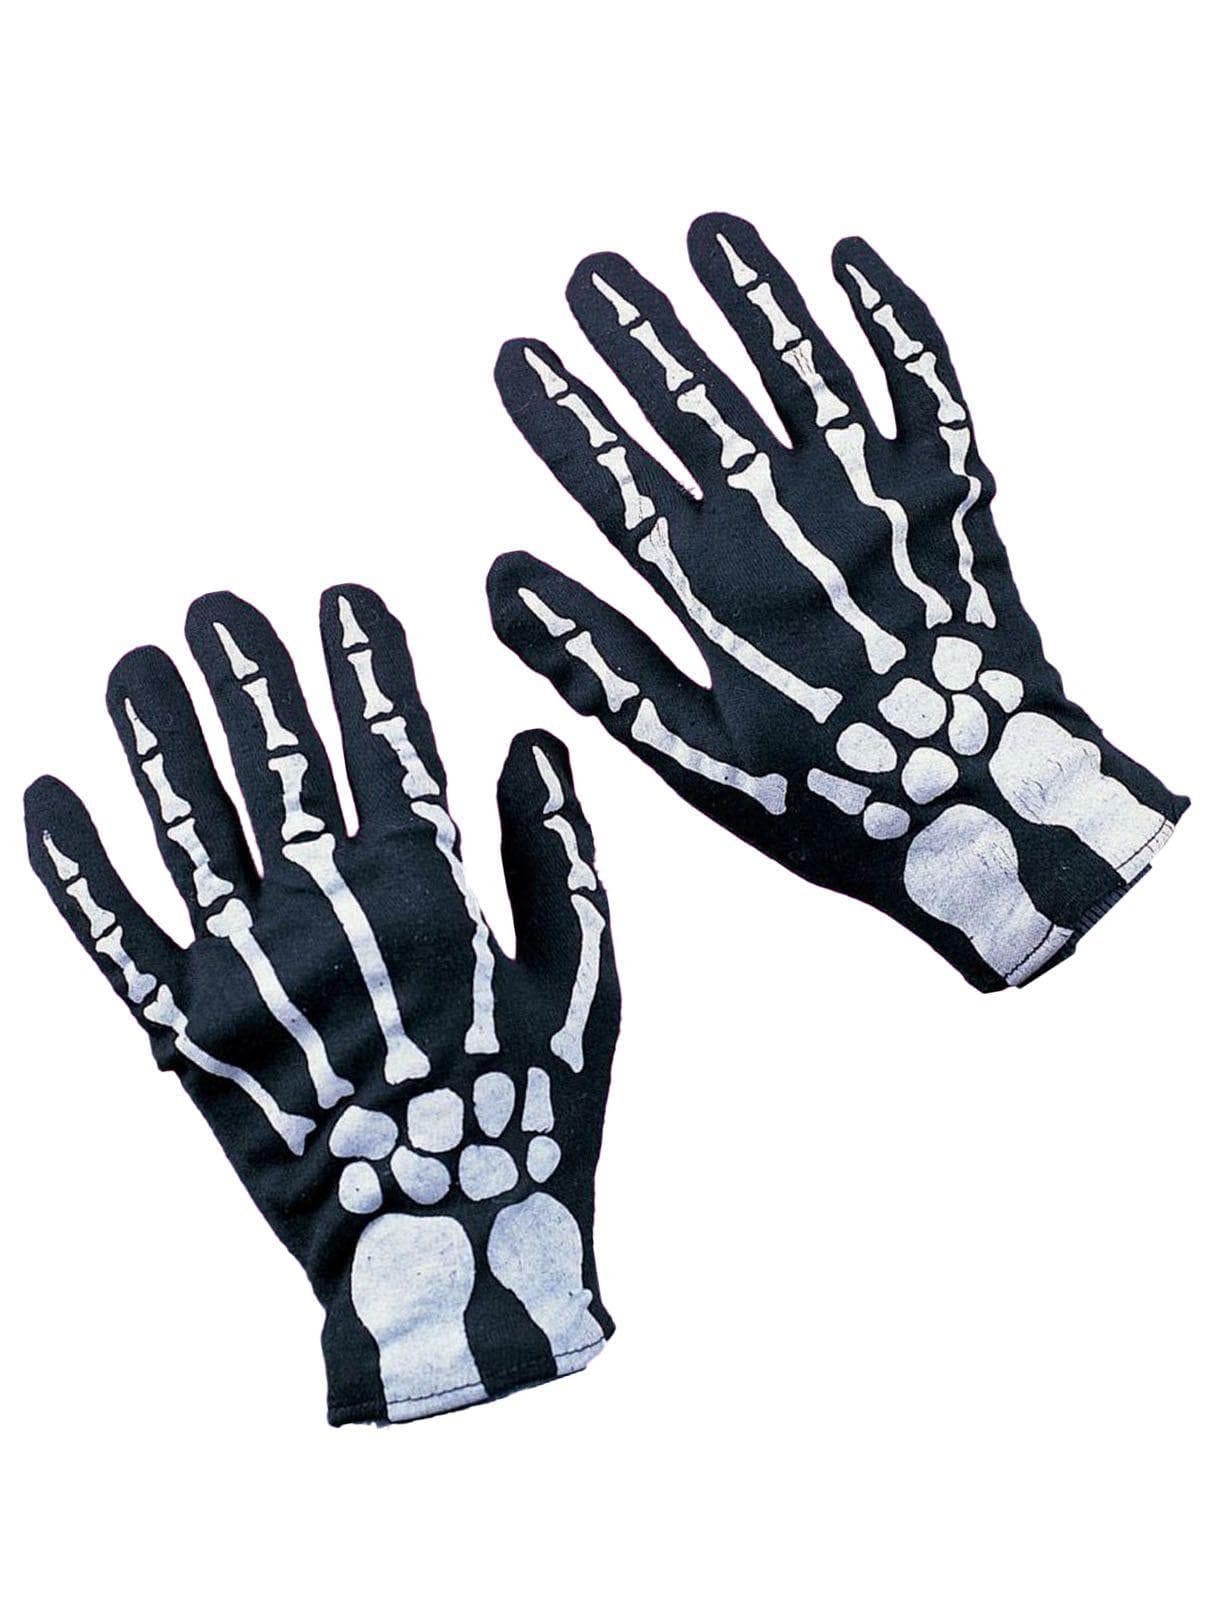 Kids' Skeleton Hand Gloves - costumes.com